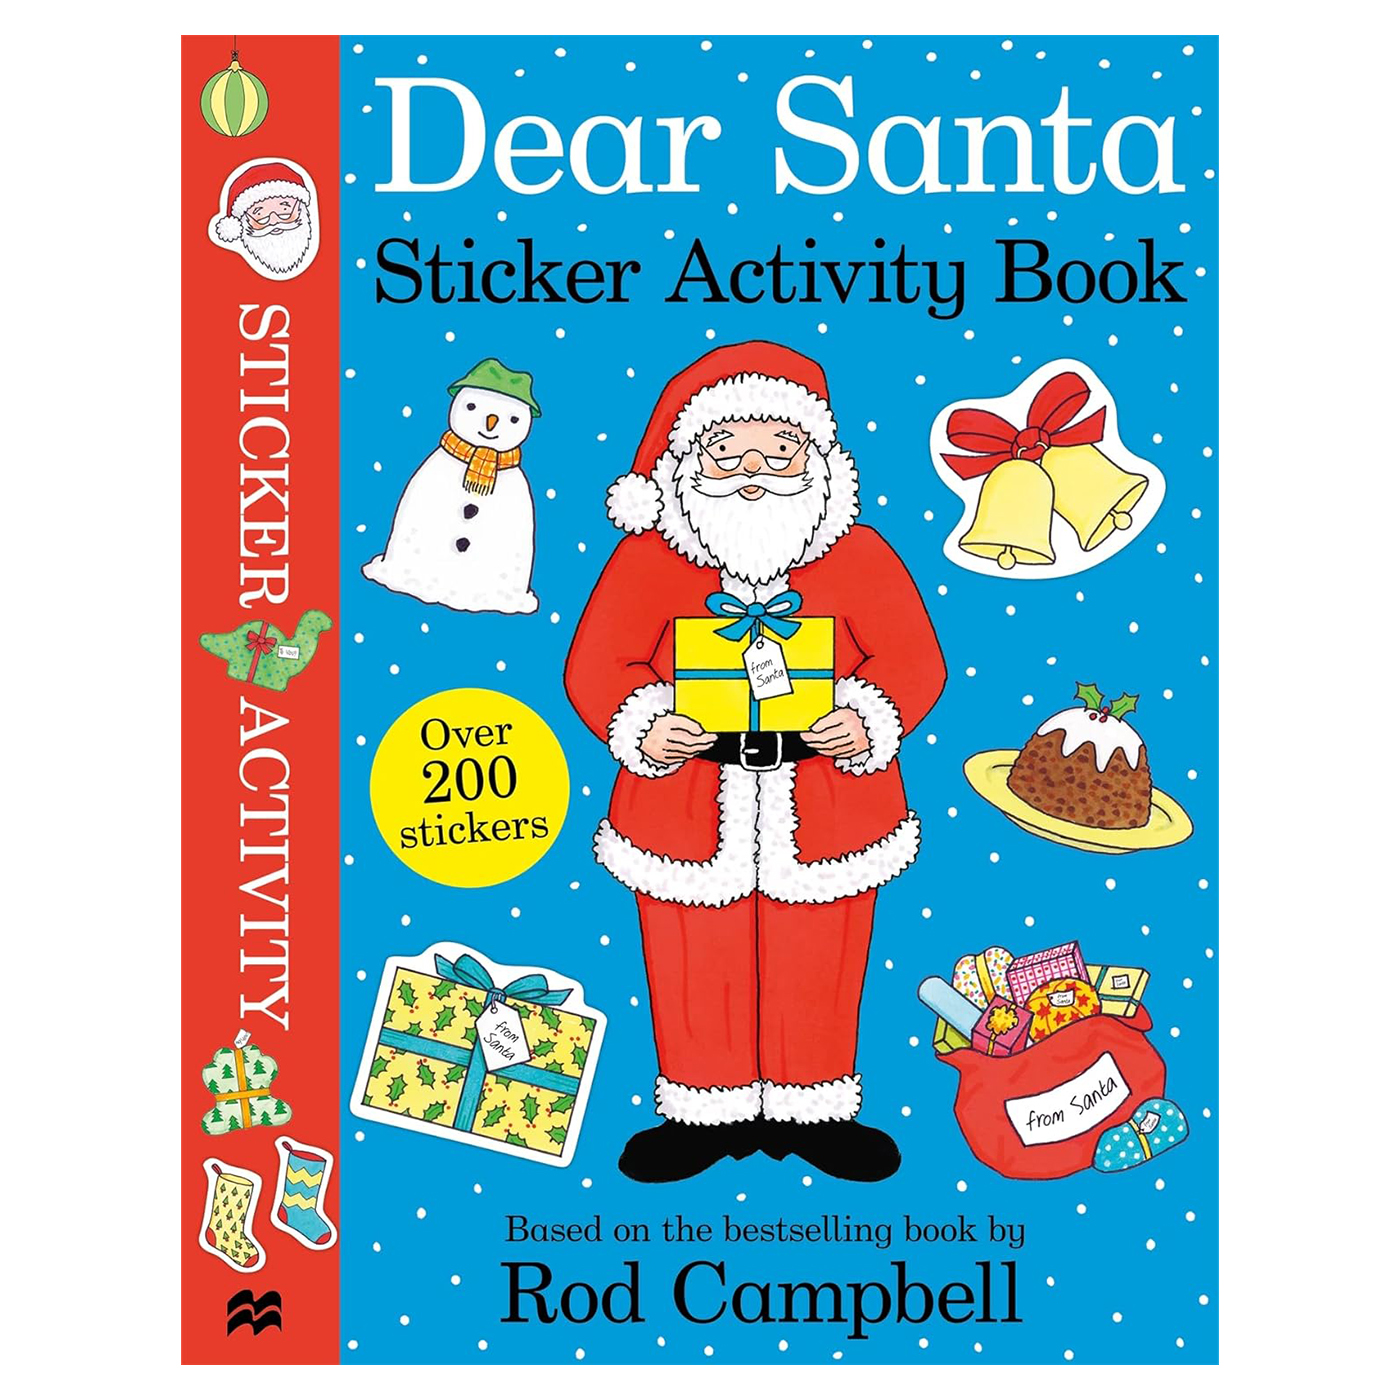  Dear Santa Sticker Activity Book